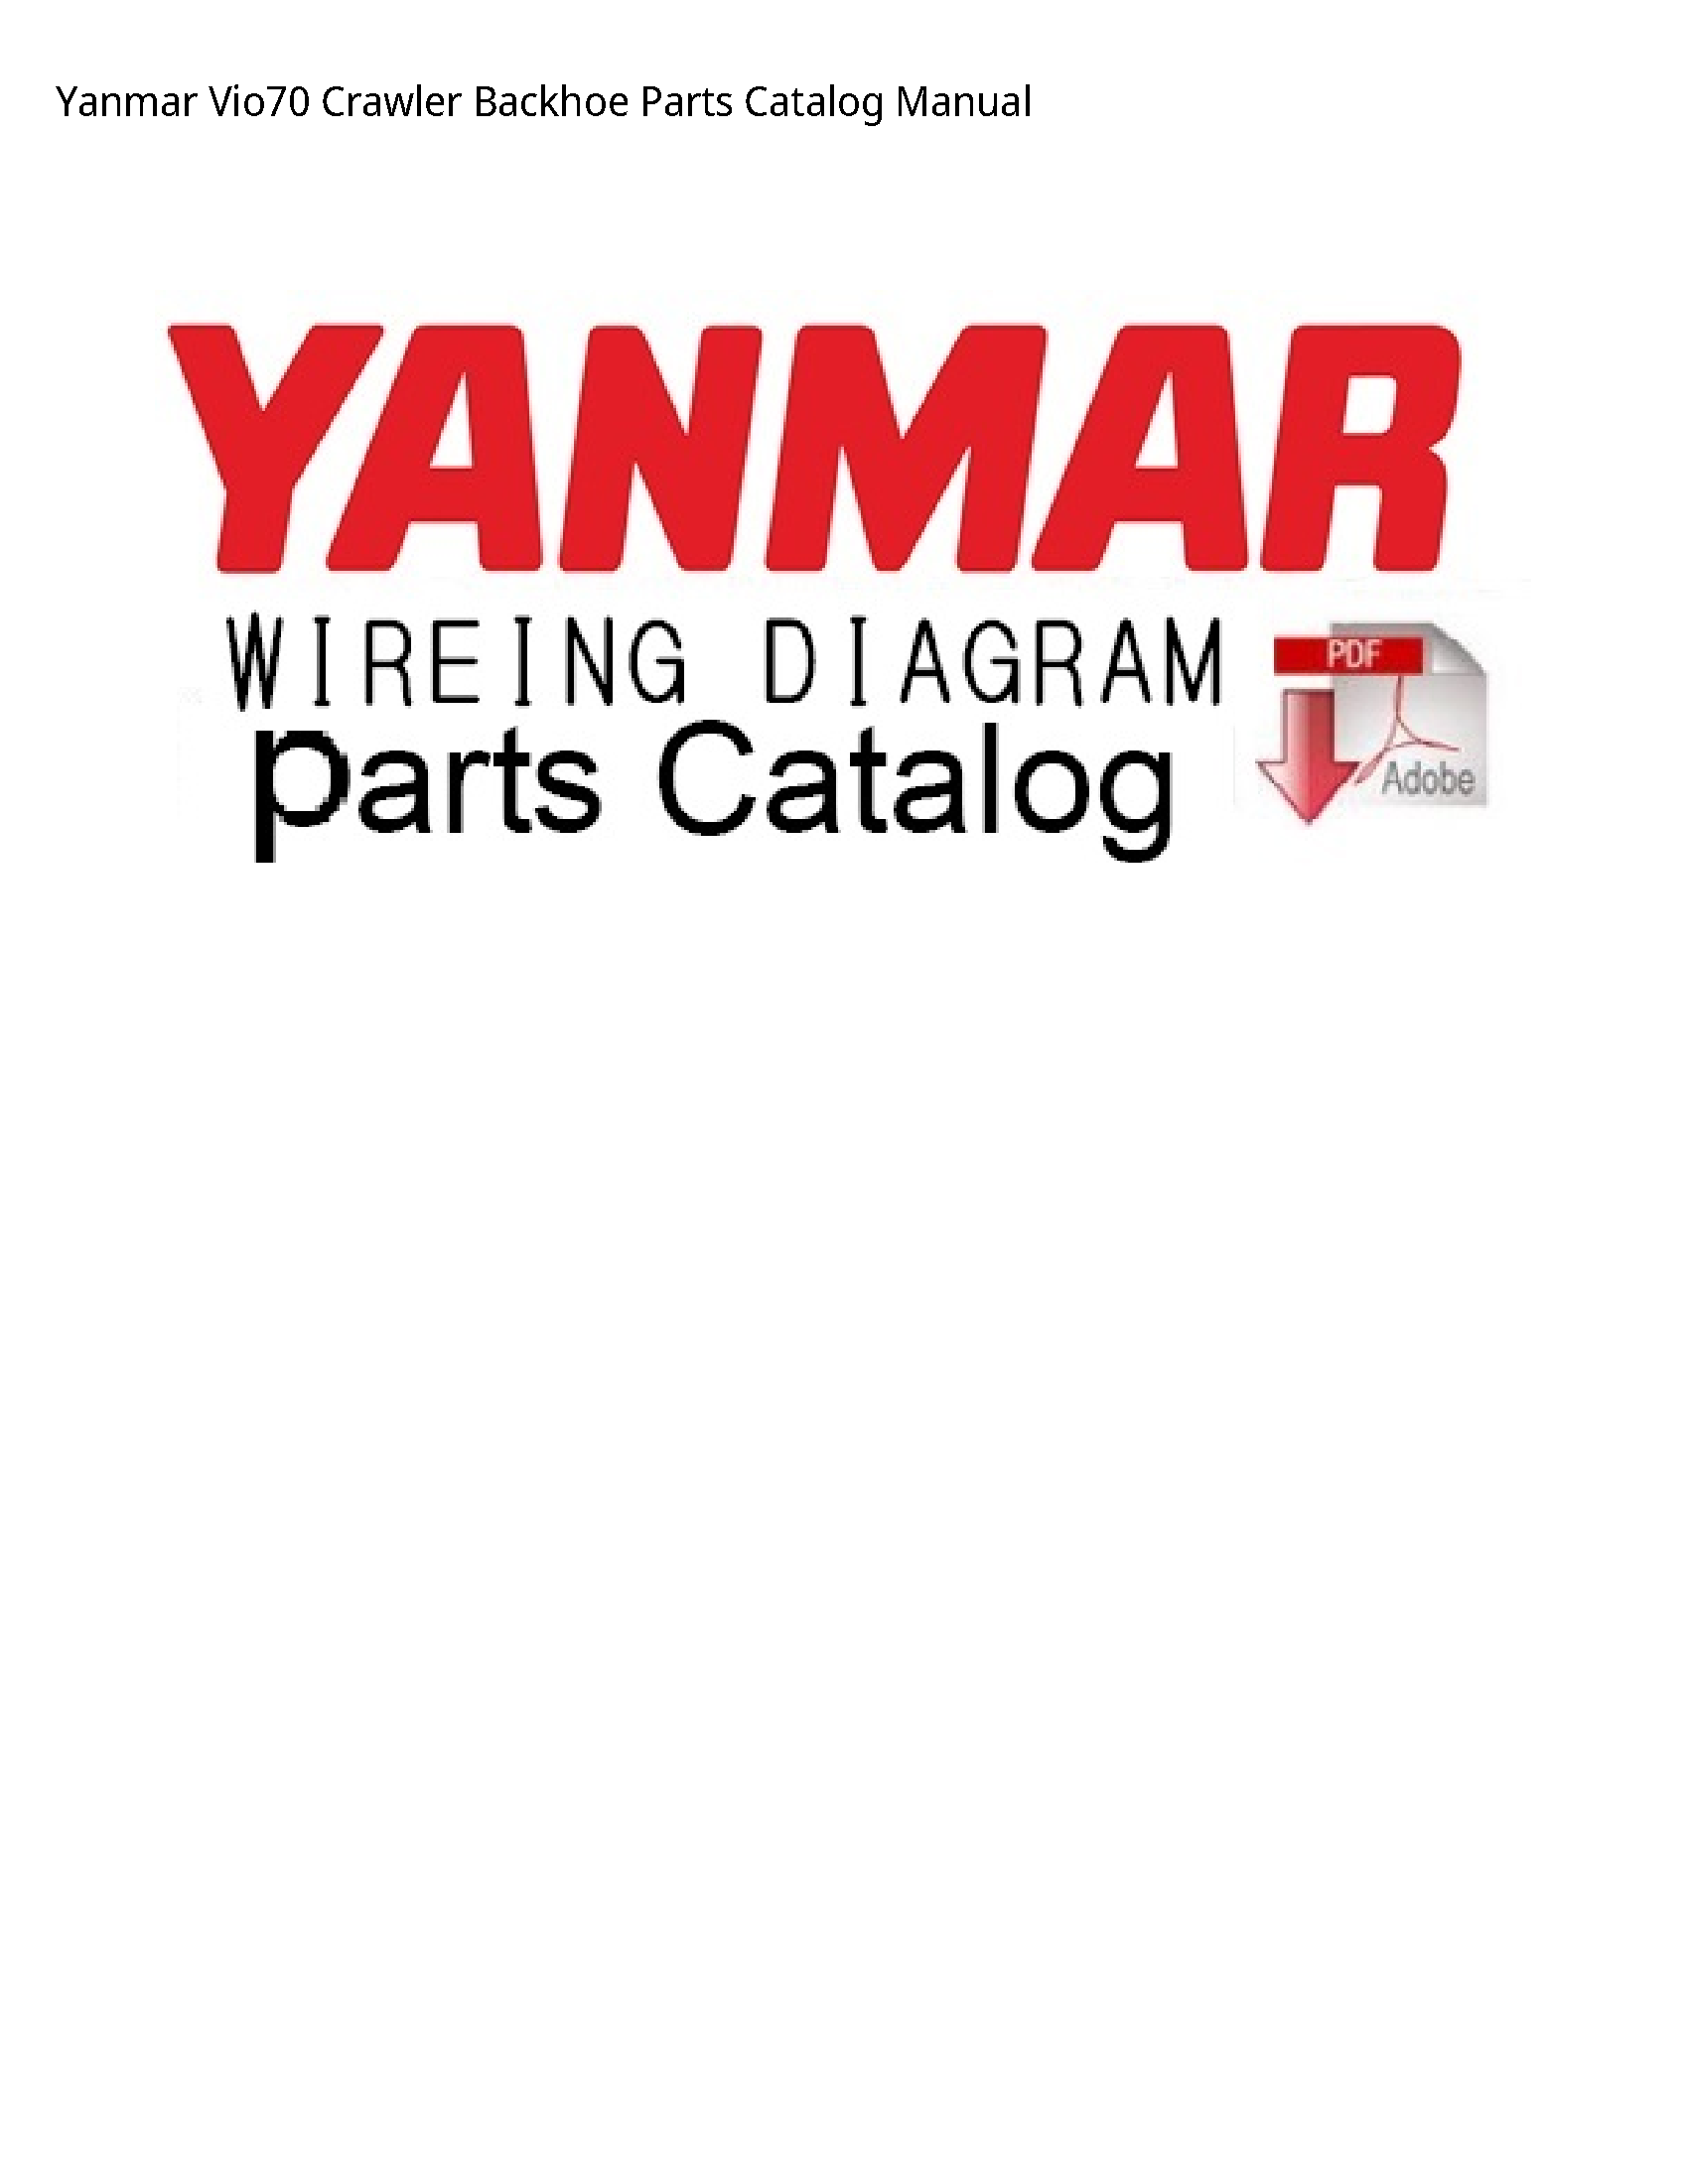 Yanmar Vio70 Crawler Backhoe Parts Catalog manual